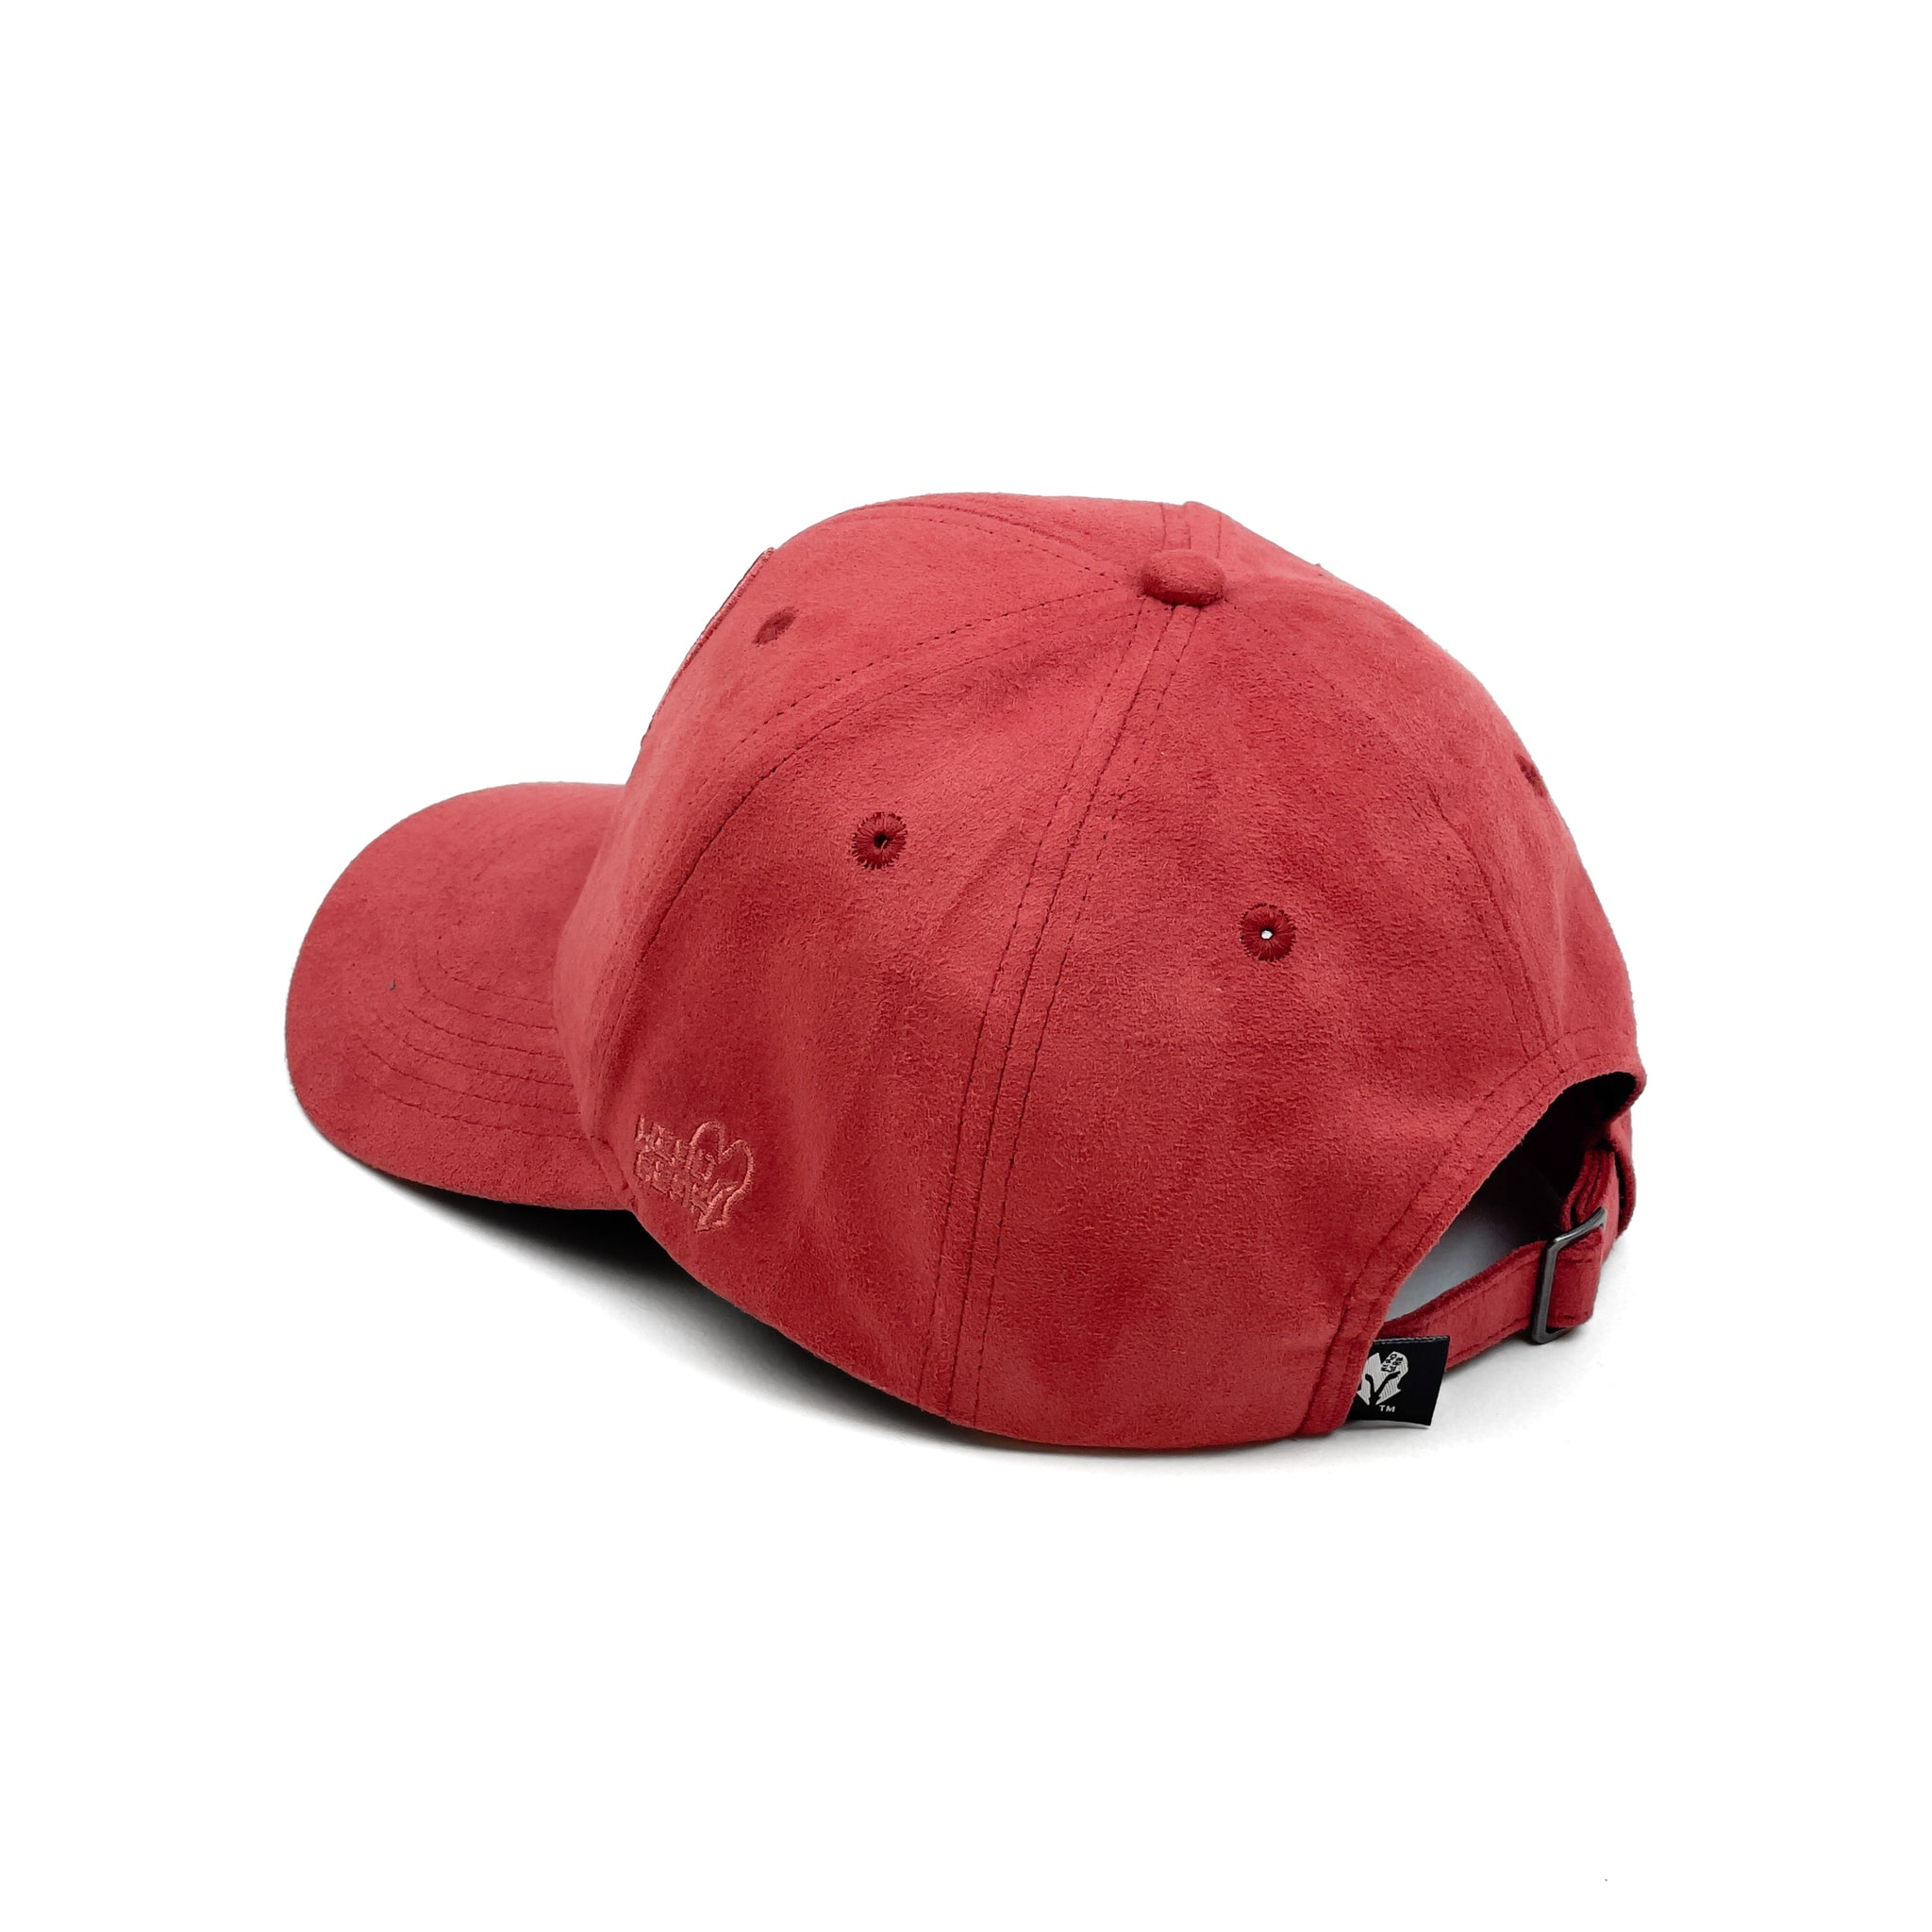 HEAD GEAR BARN RED SUPER SUEDE CURVED VISOR CAP